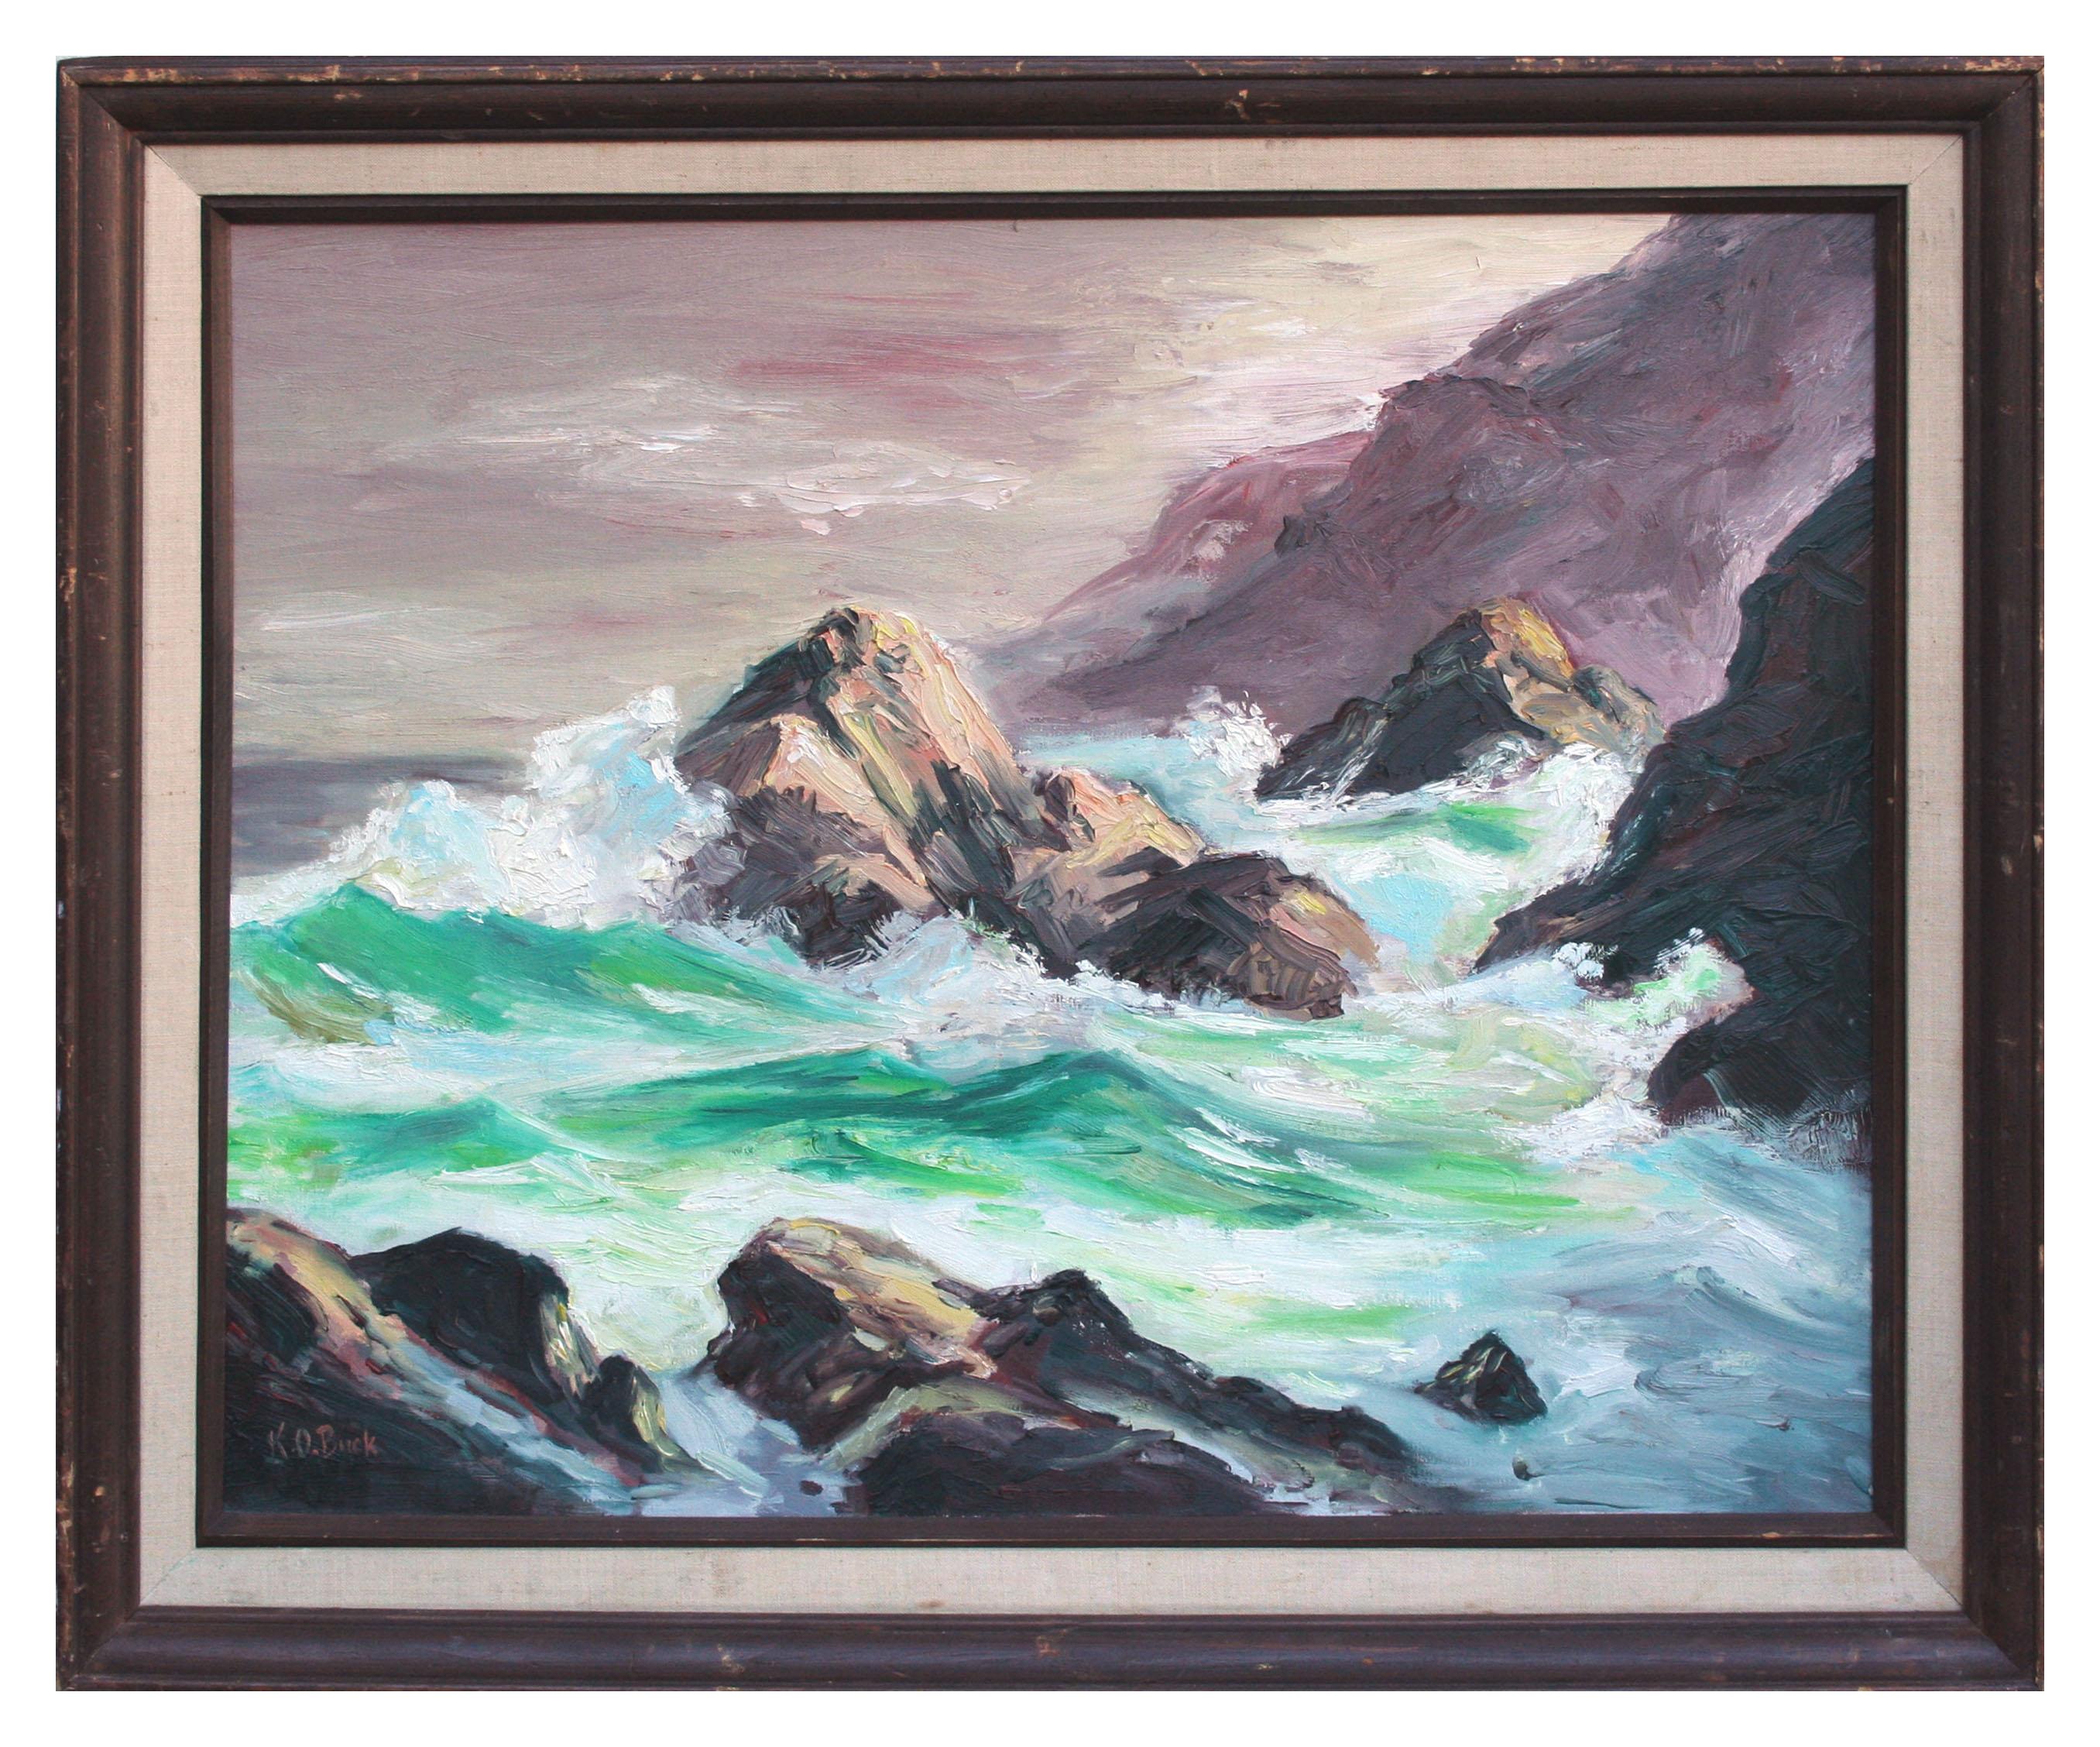 Landscape Painting K.O. Buck - California Coastal Waves Seascape Original Oil on Canvas